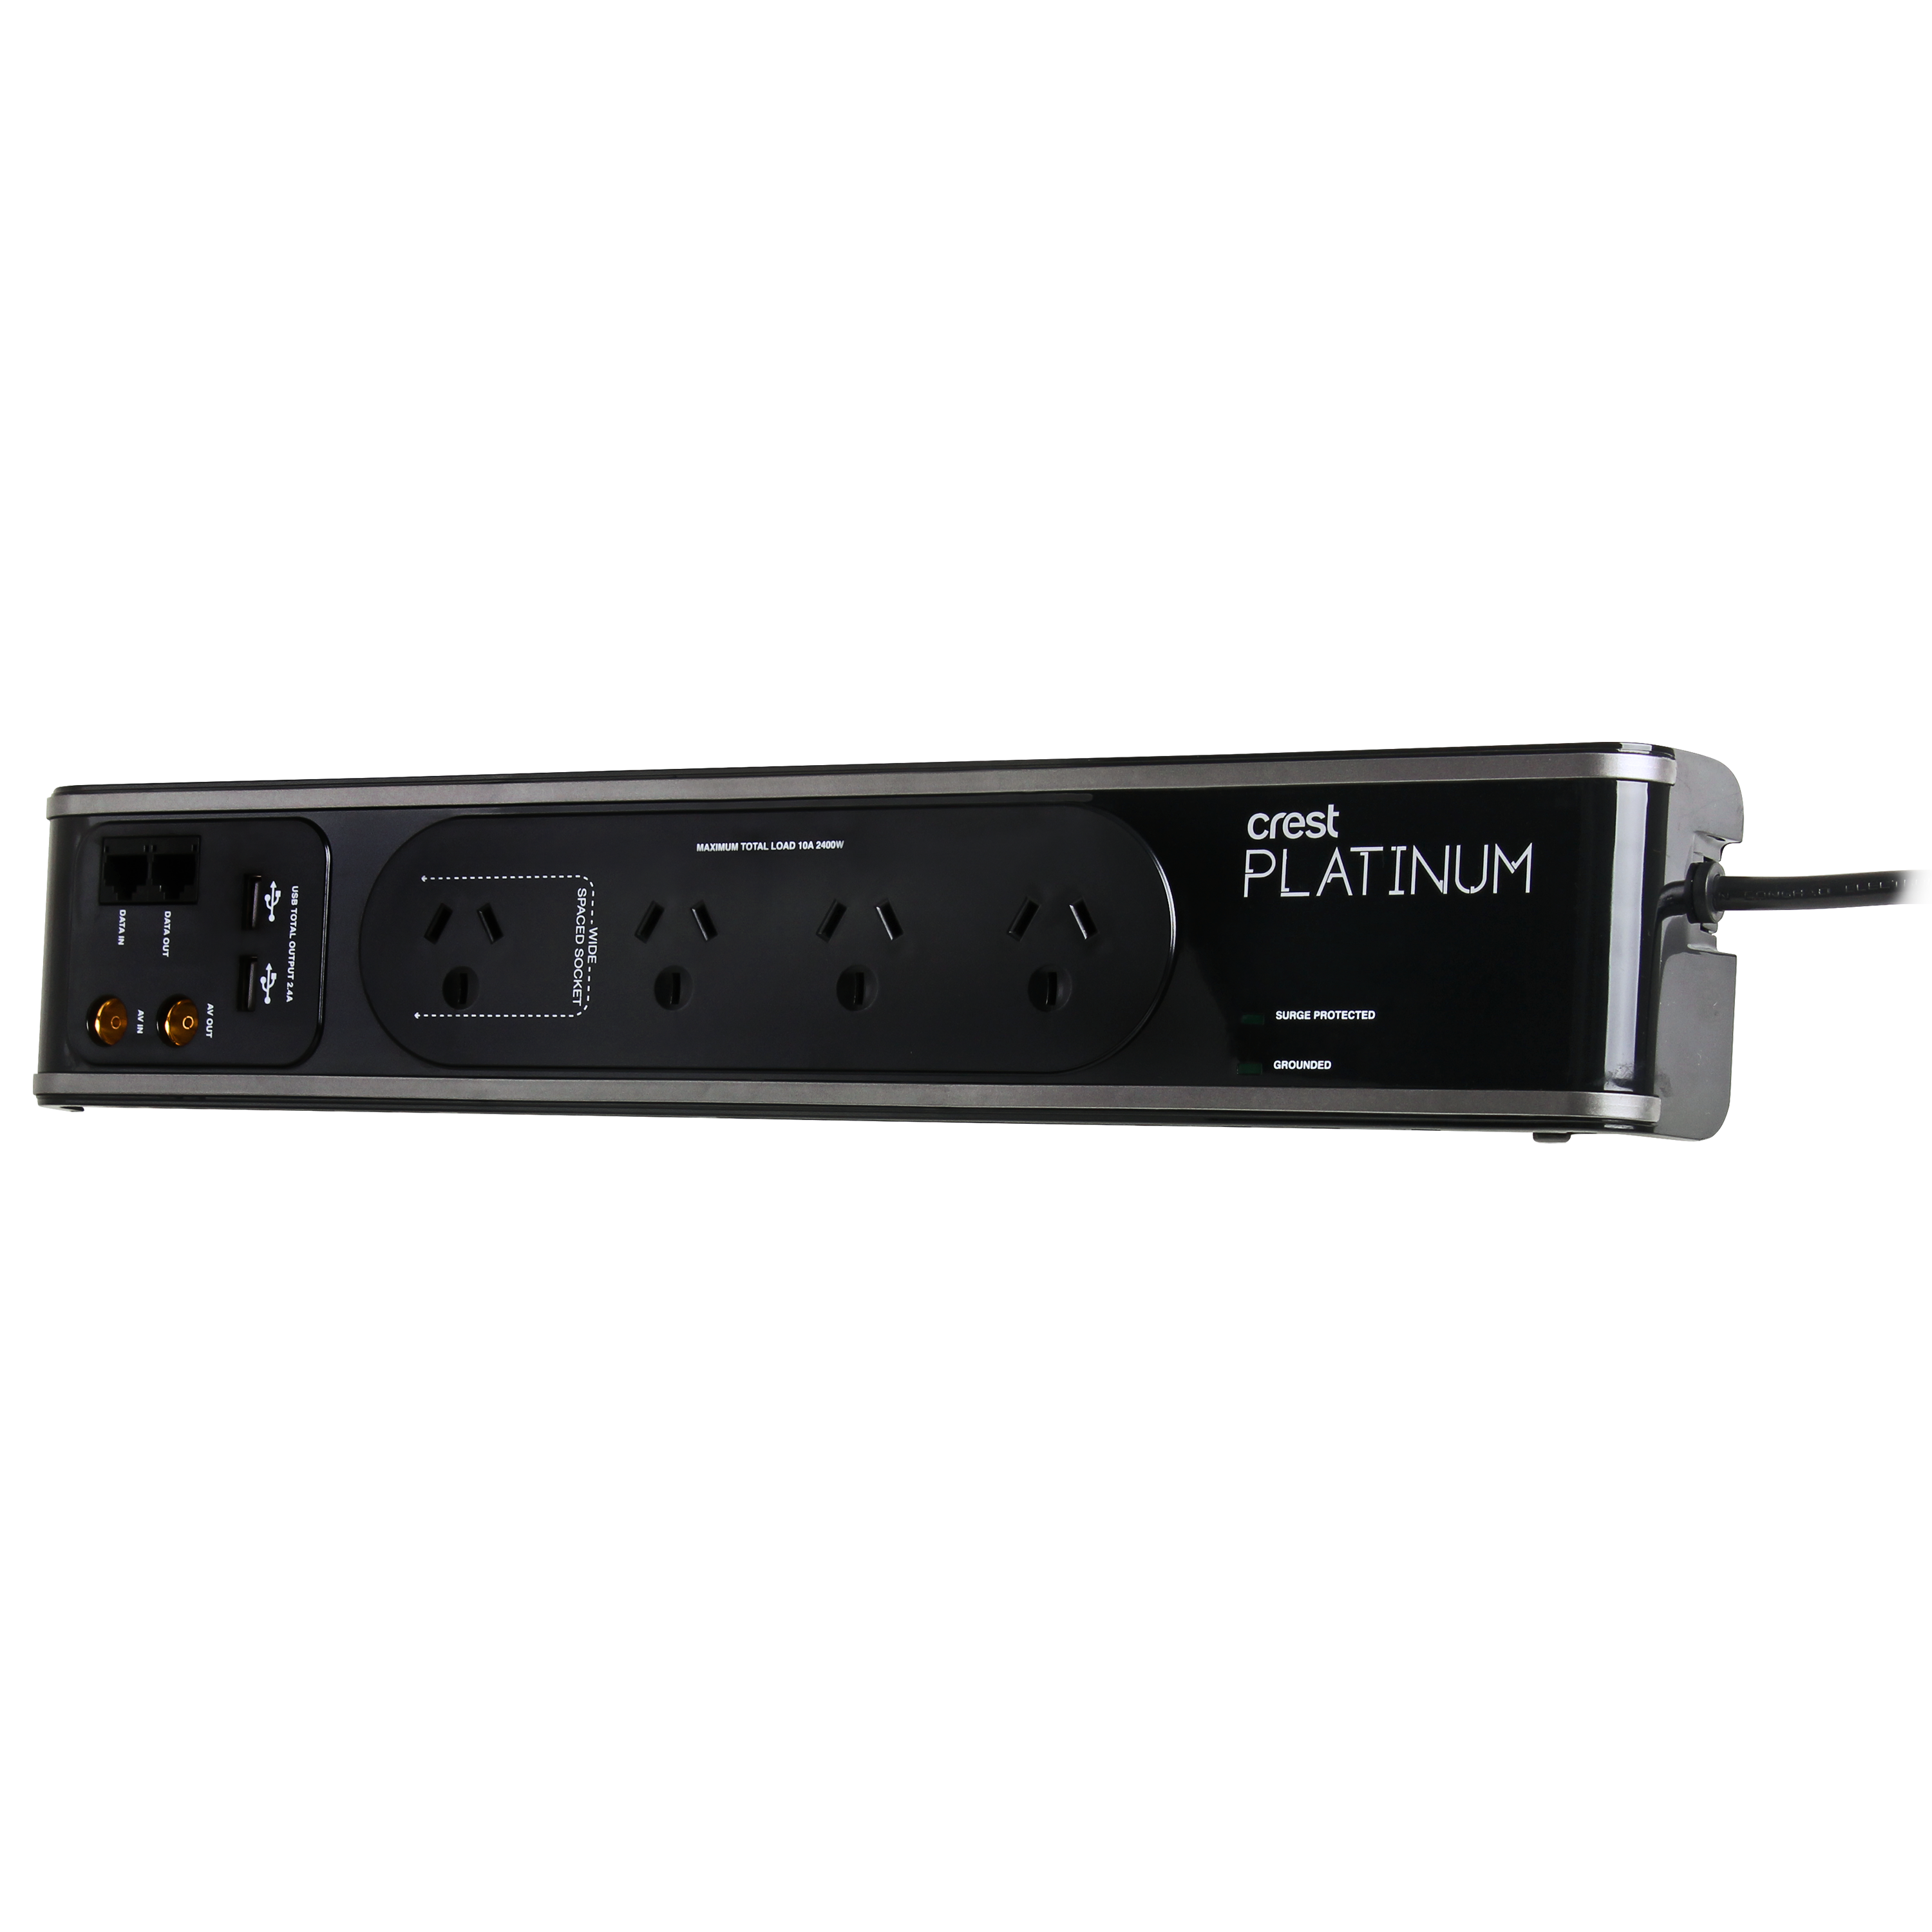 Platinum Power Board 4 Socket 2 USB Surge Coax & Data